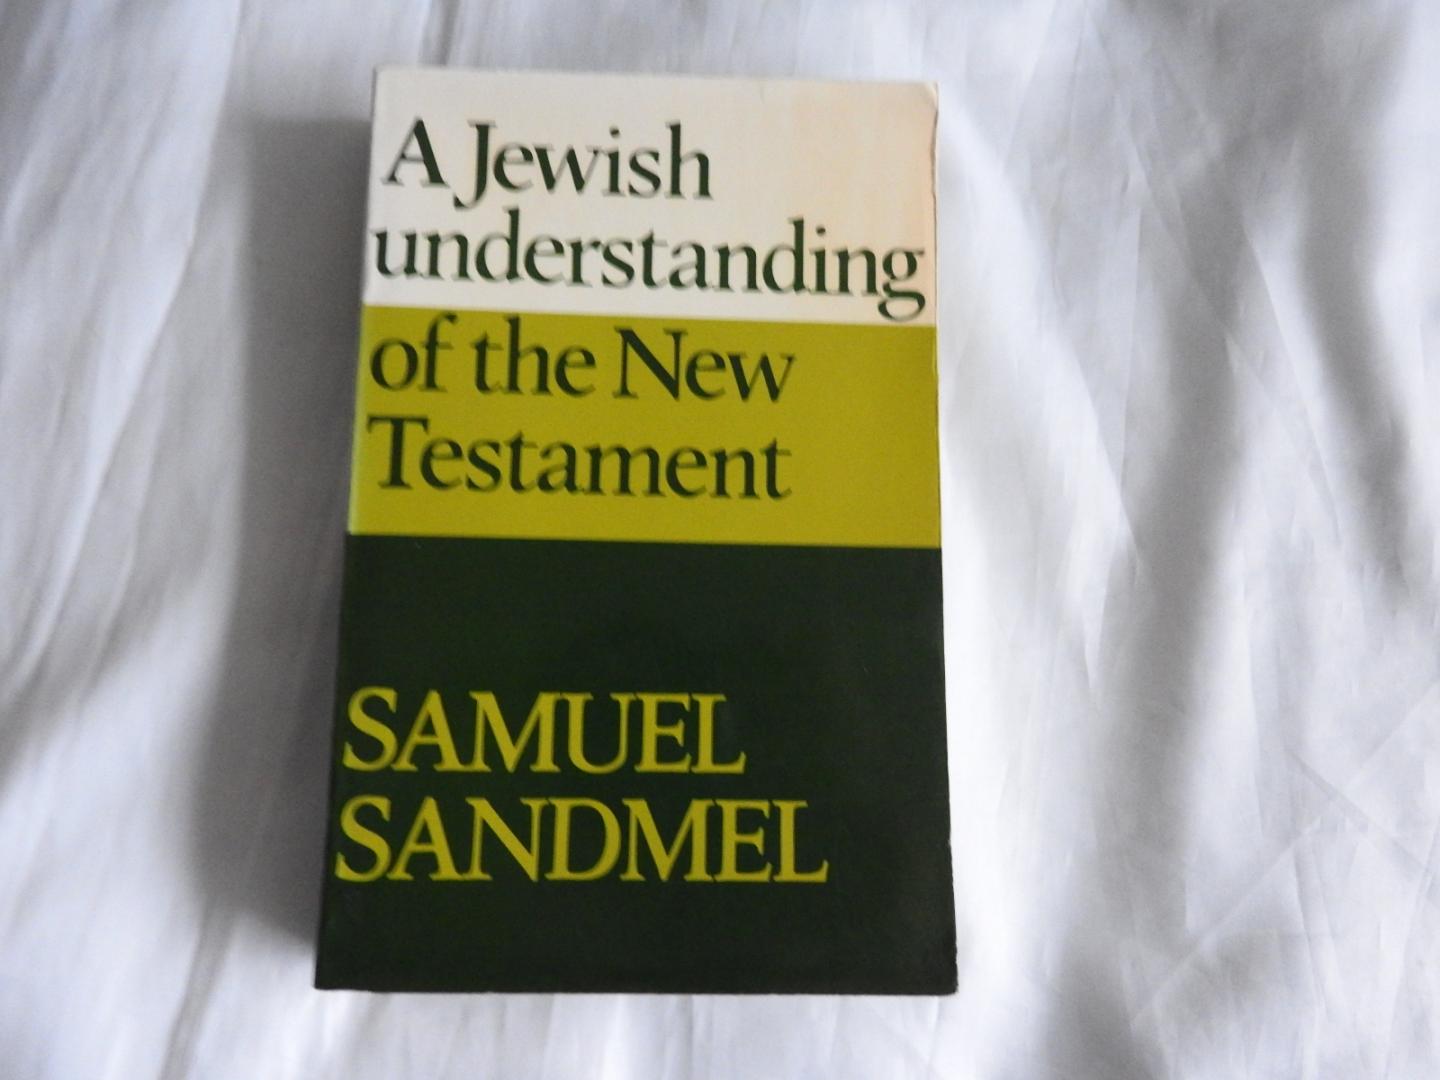 Sandmel, Samuel S. - A Jewish Understanding of the New Testament